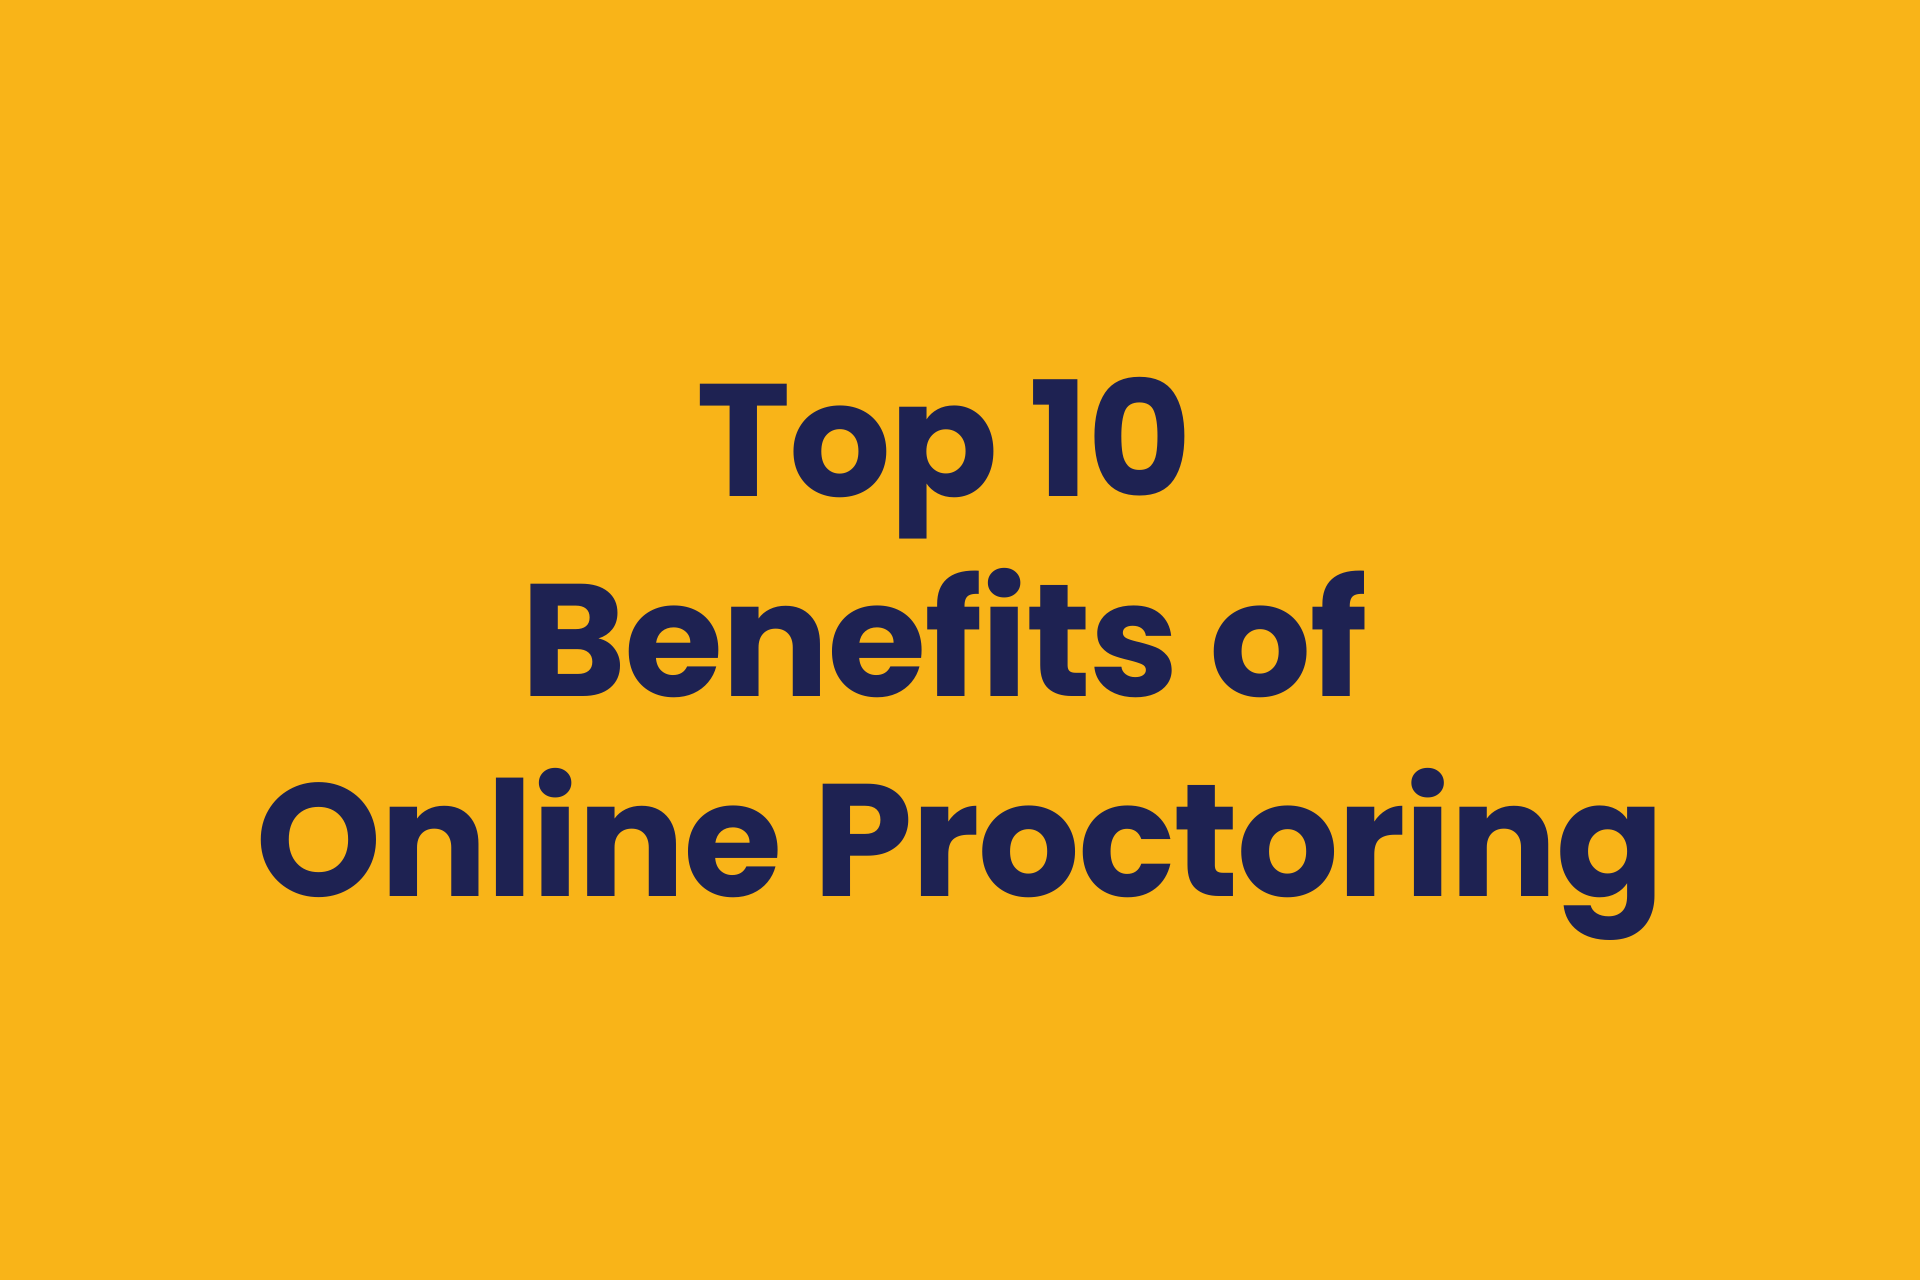 Benefits of online proctoring services